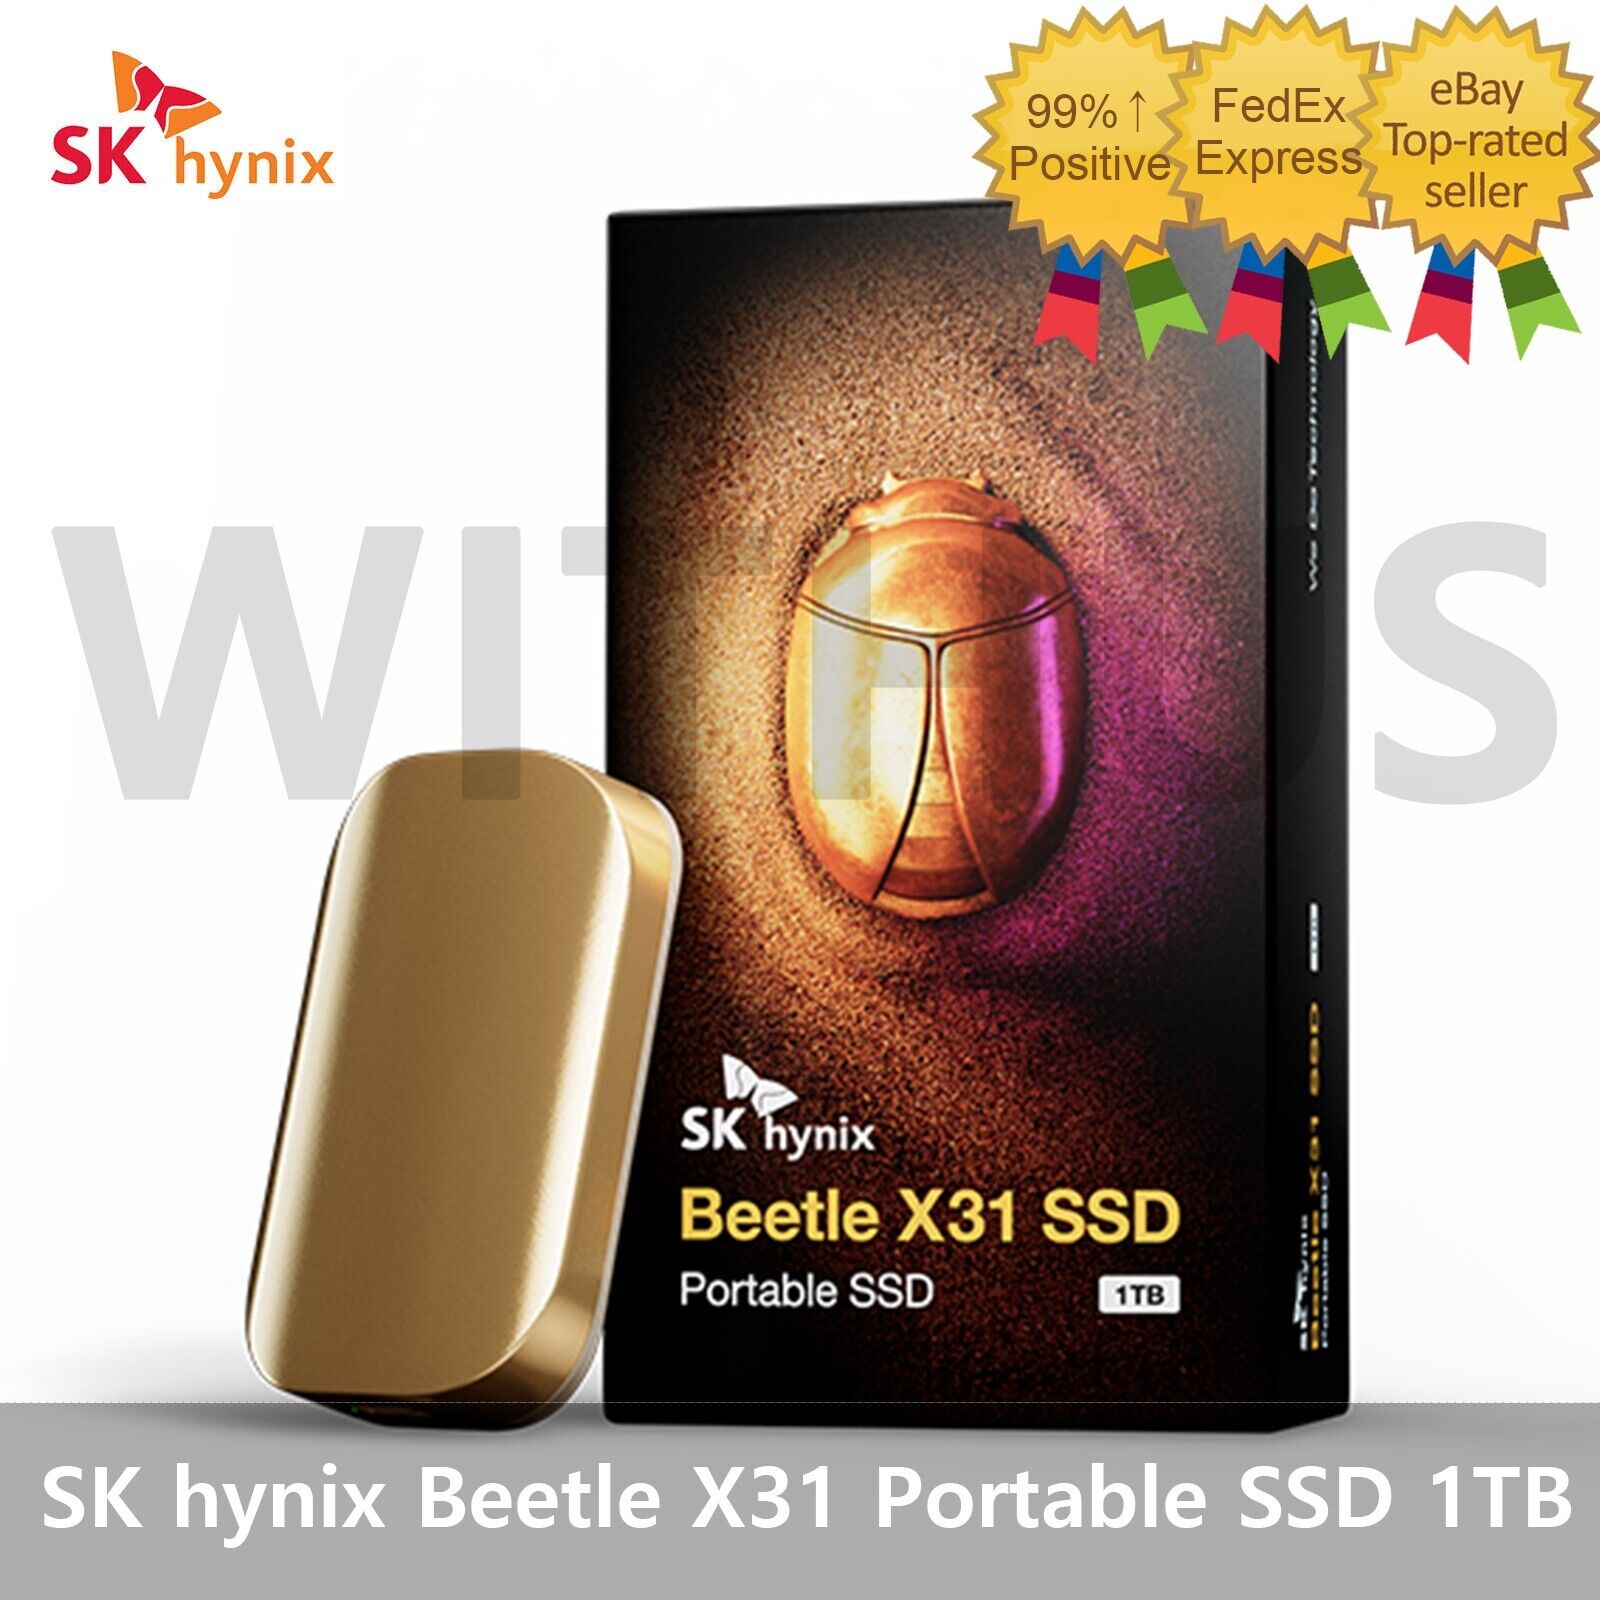 SK hynix Beetle X31 Portable SSD 1TB Read 1,050MB/s, Write 1,000MB/s